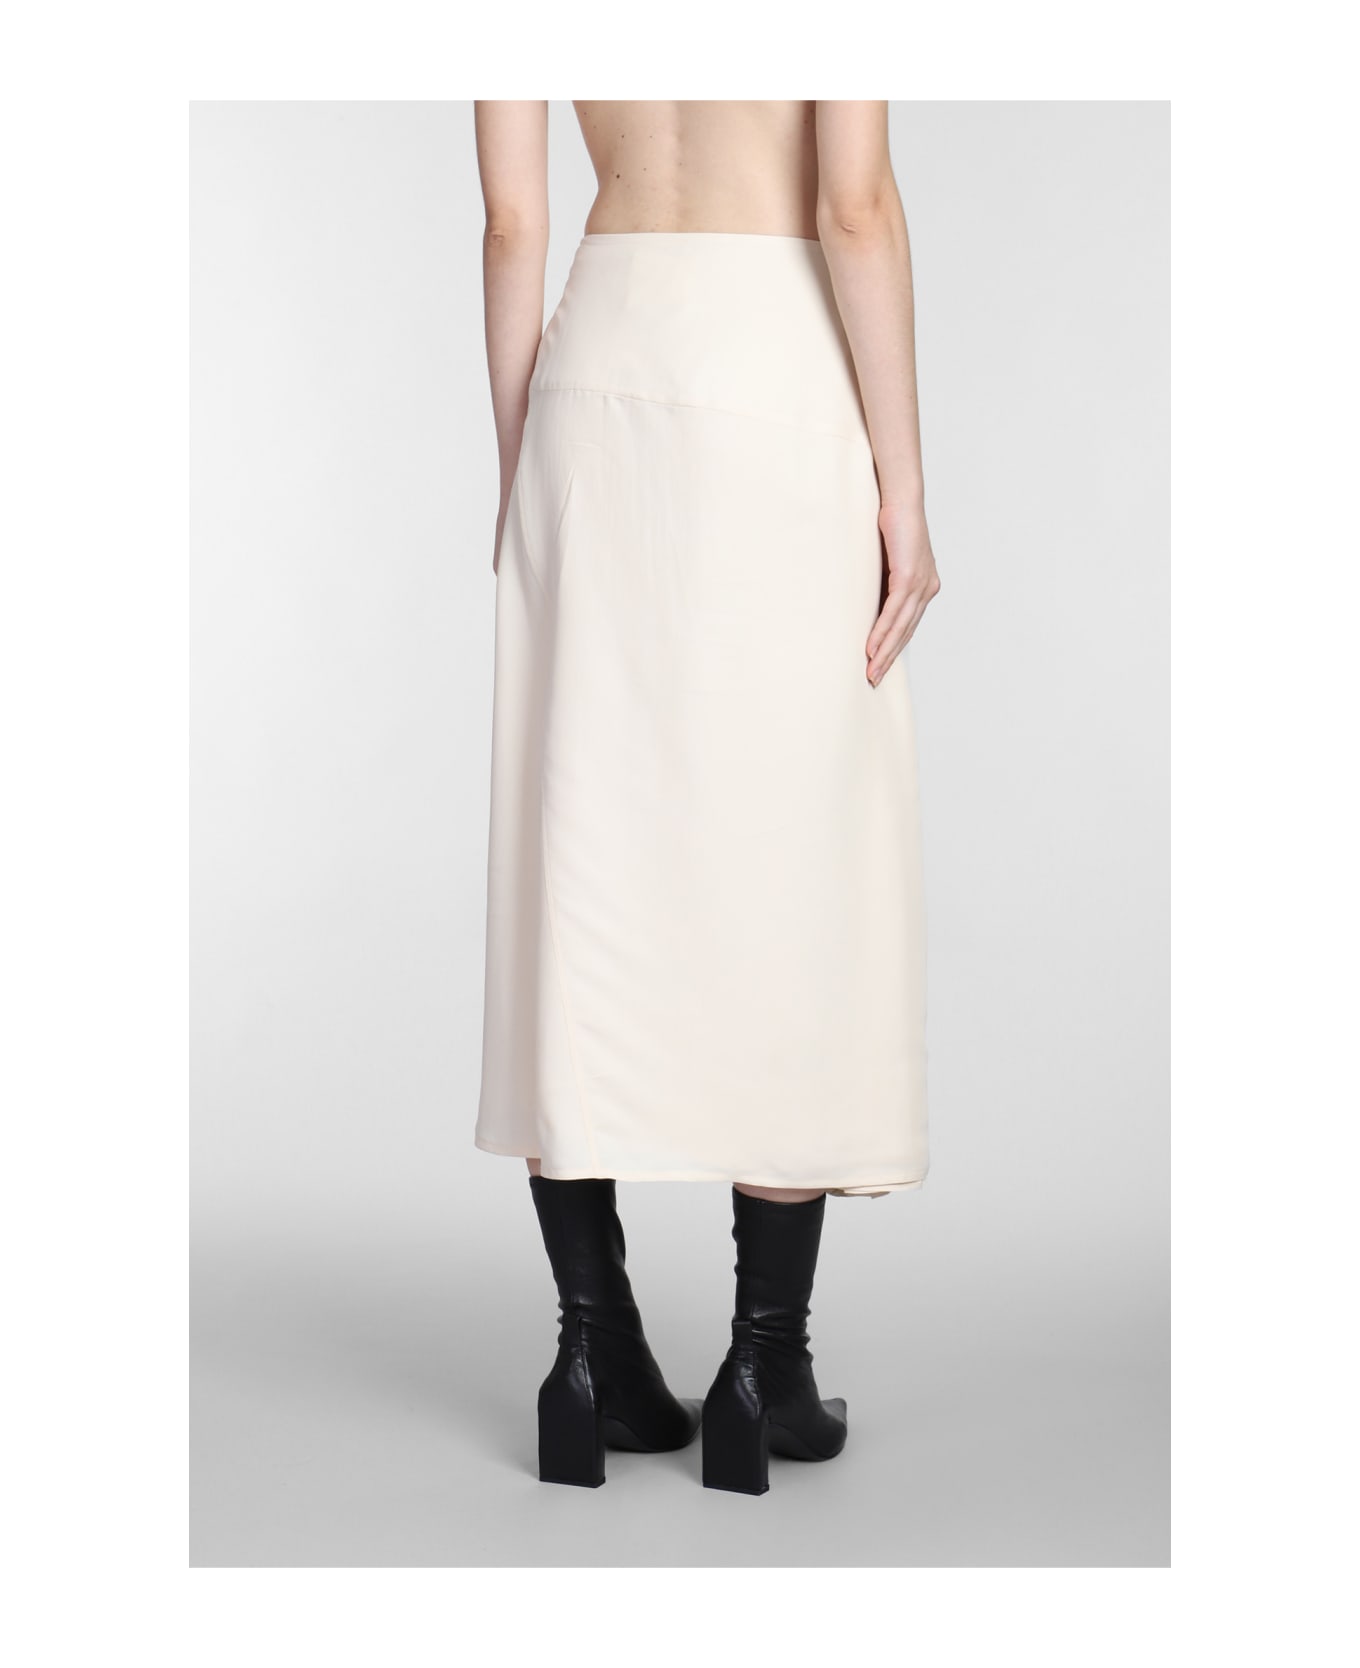 Jil Sander Skirt In Beige Wool - White candle スカート